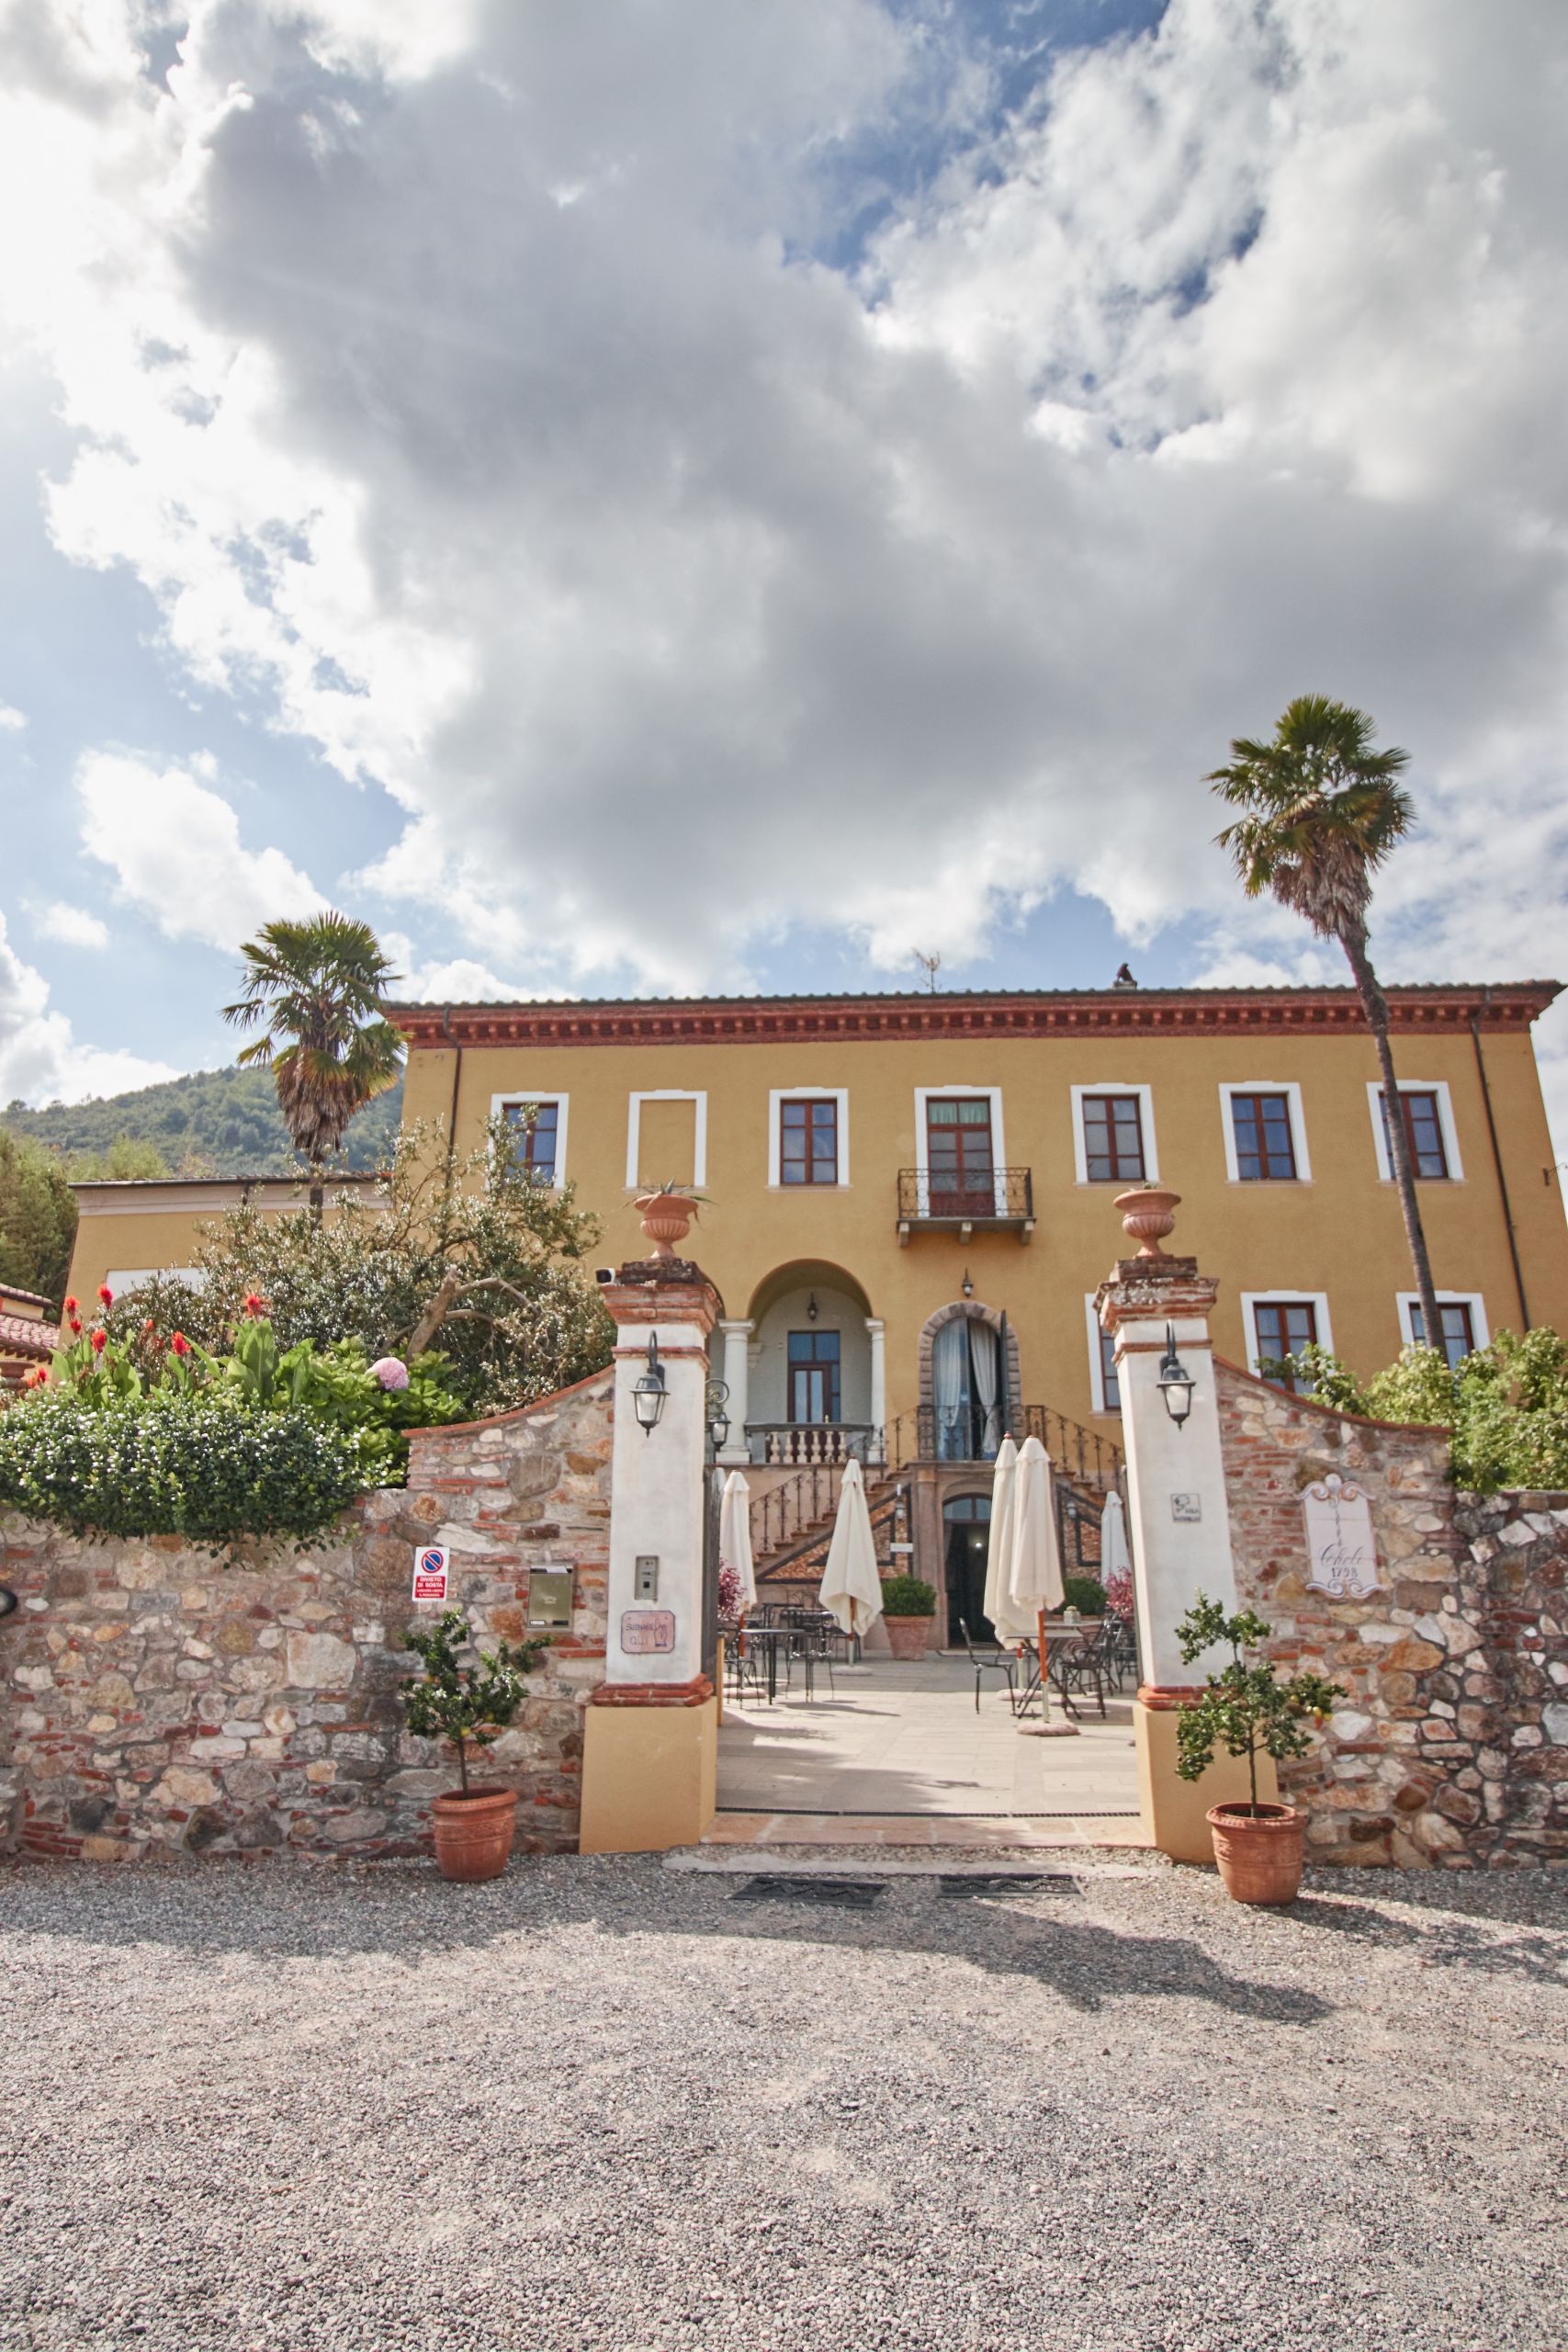 Villa Cheli Lucca als Stopp vom Toskana Roadtrip